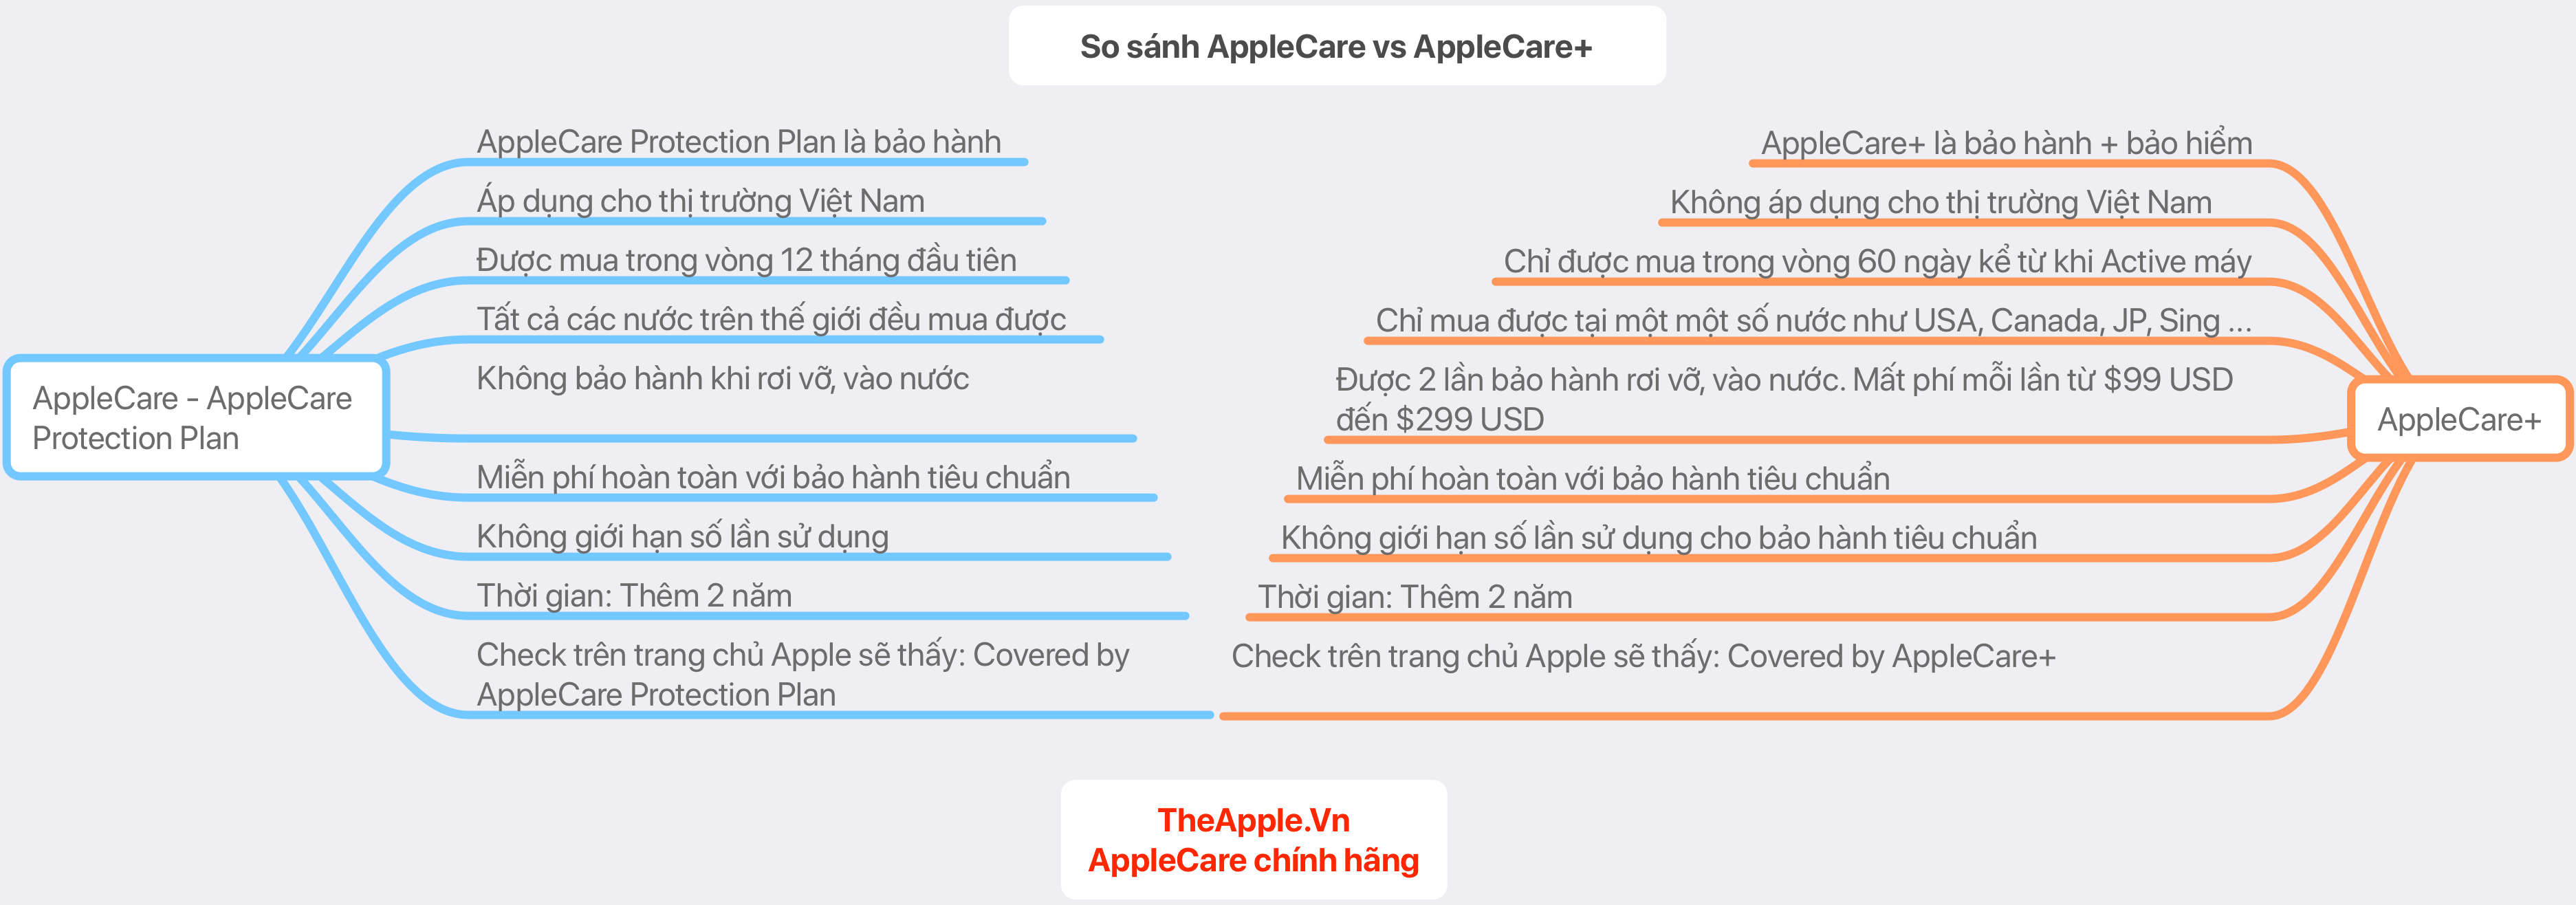 Đang tải AppleCare vs AppleCare+.png…